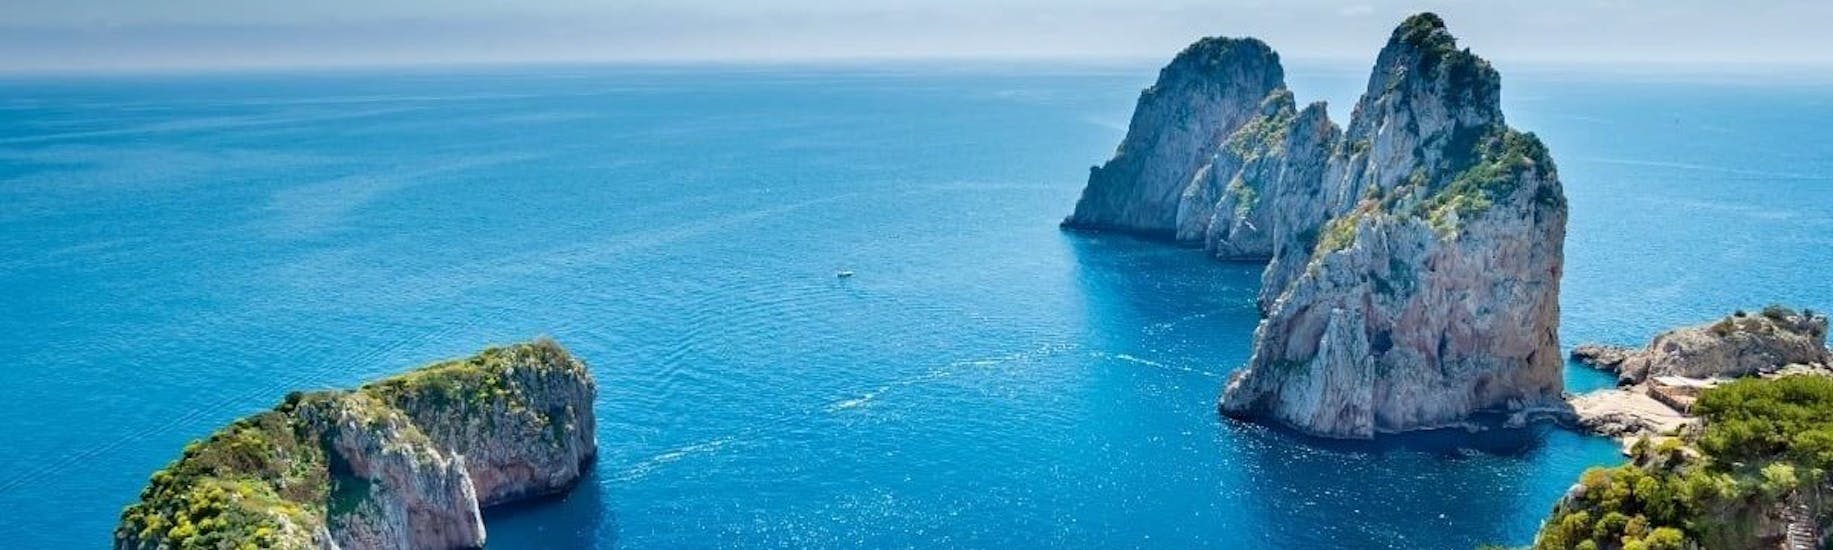 Vista de los Faraglioni durante el paseo en barco desde Pozzuoli a Capri e Ischia con almuerzo organizada por Gestour Pozzuoli.